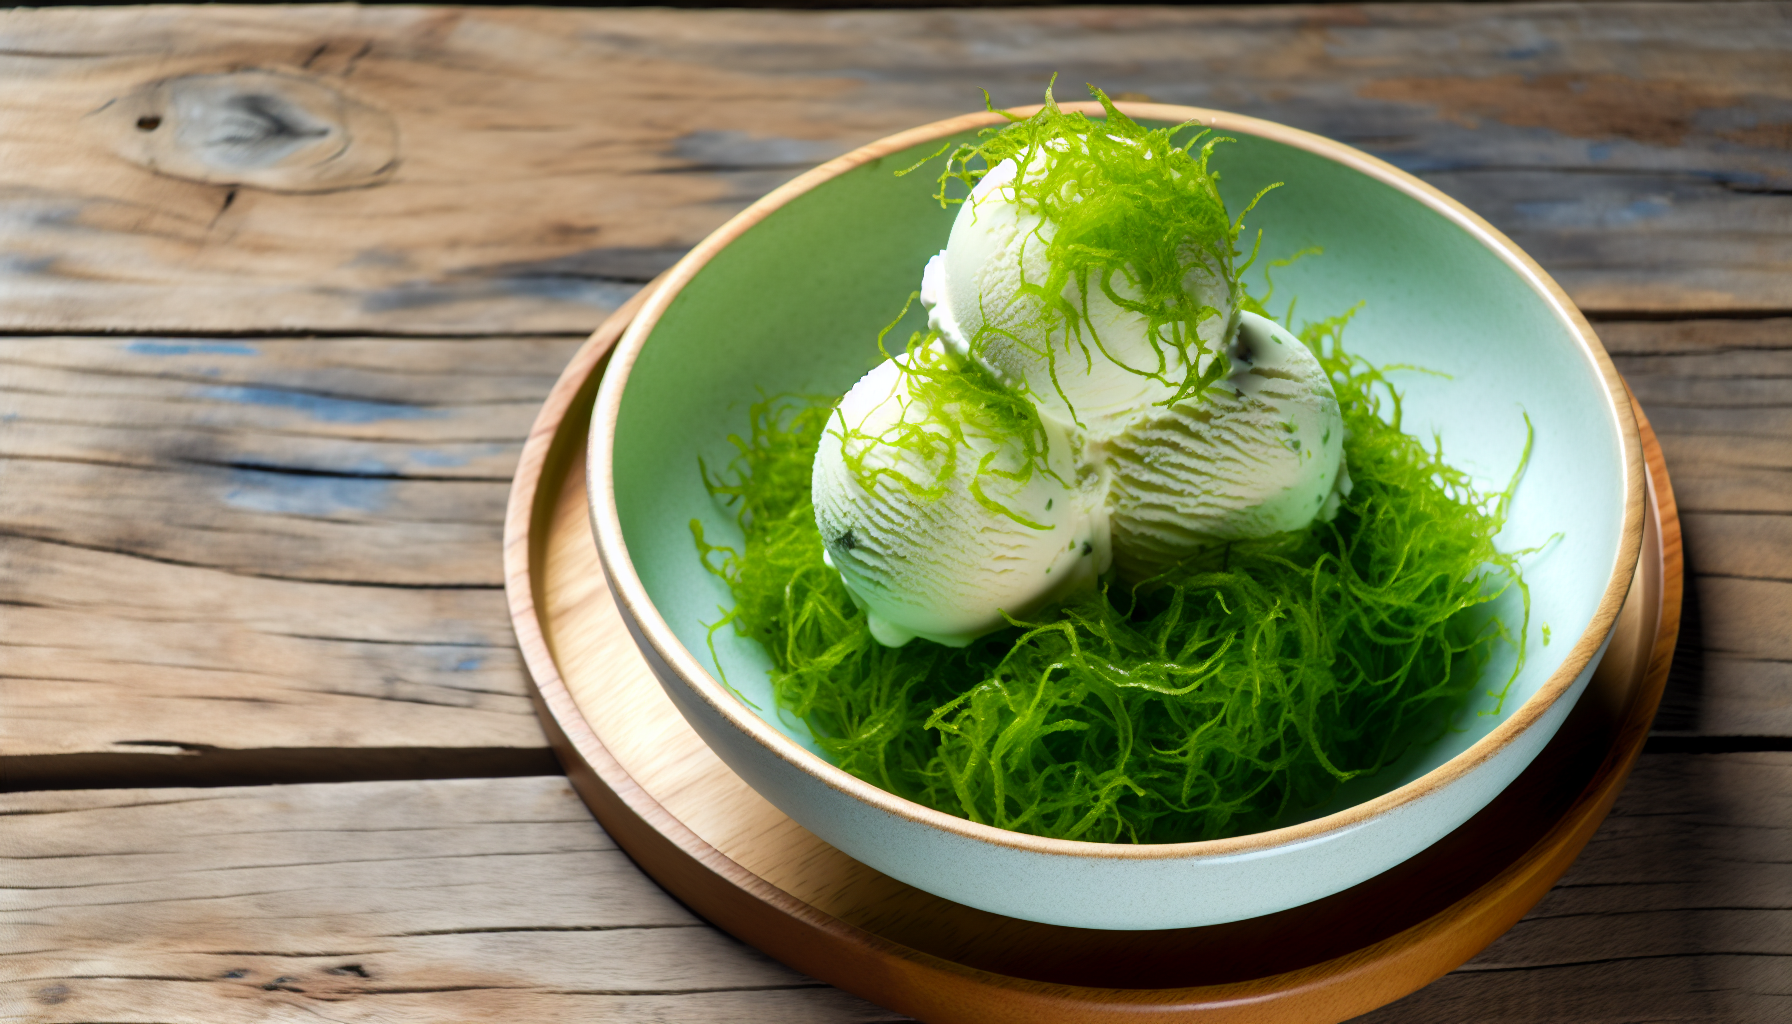 Delicious sea moss enriched ice cream